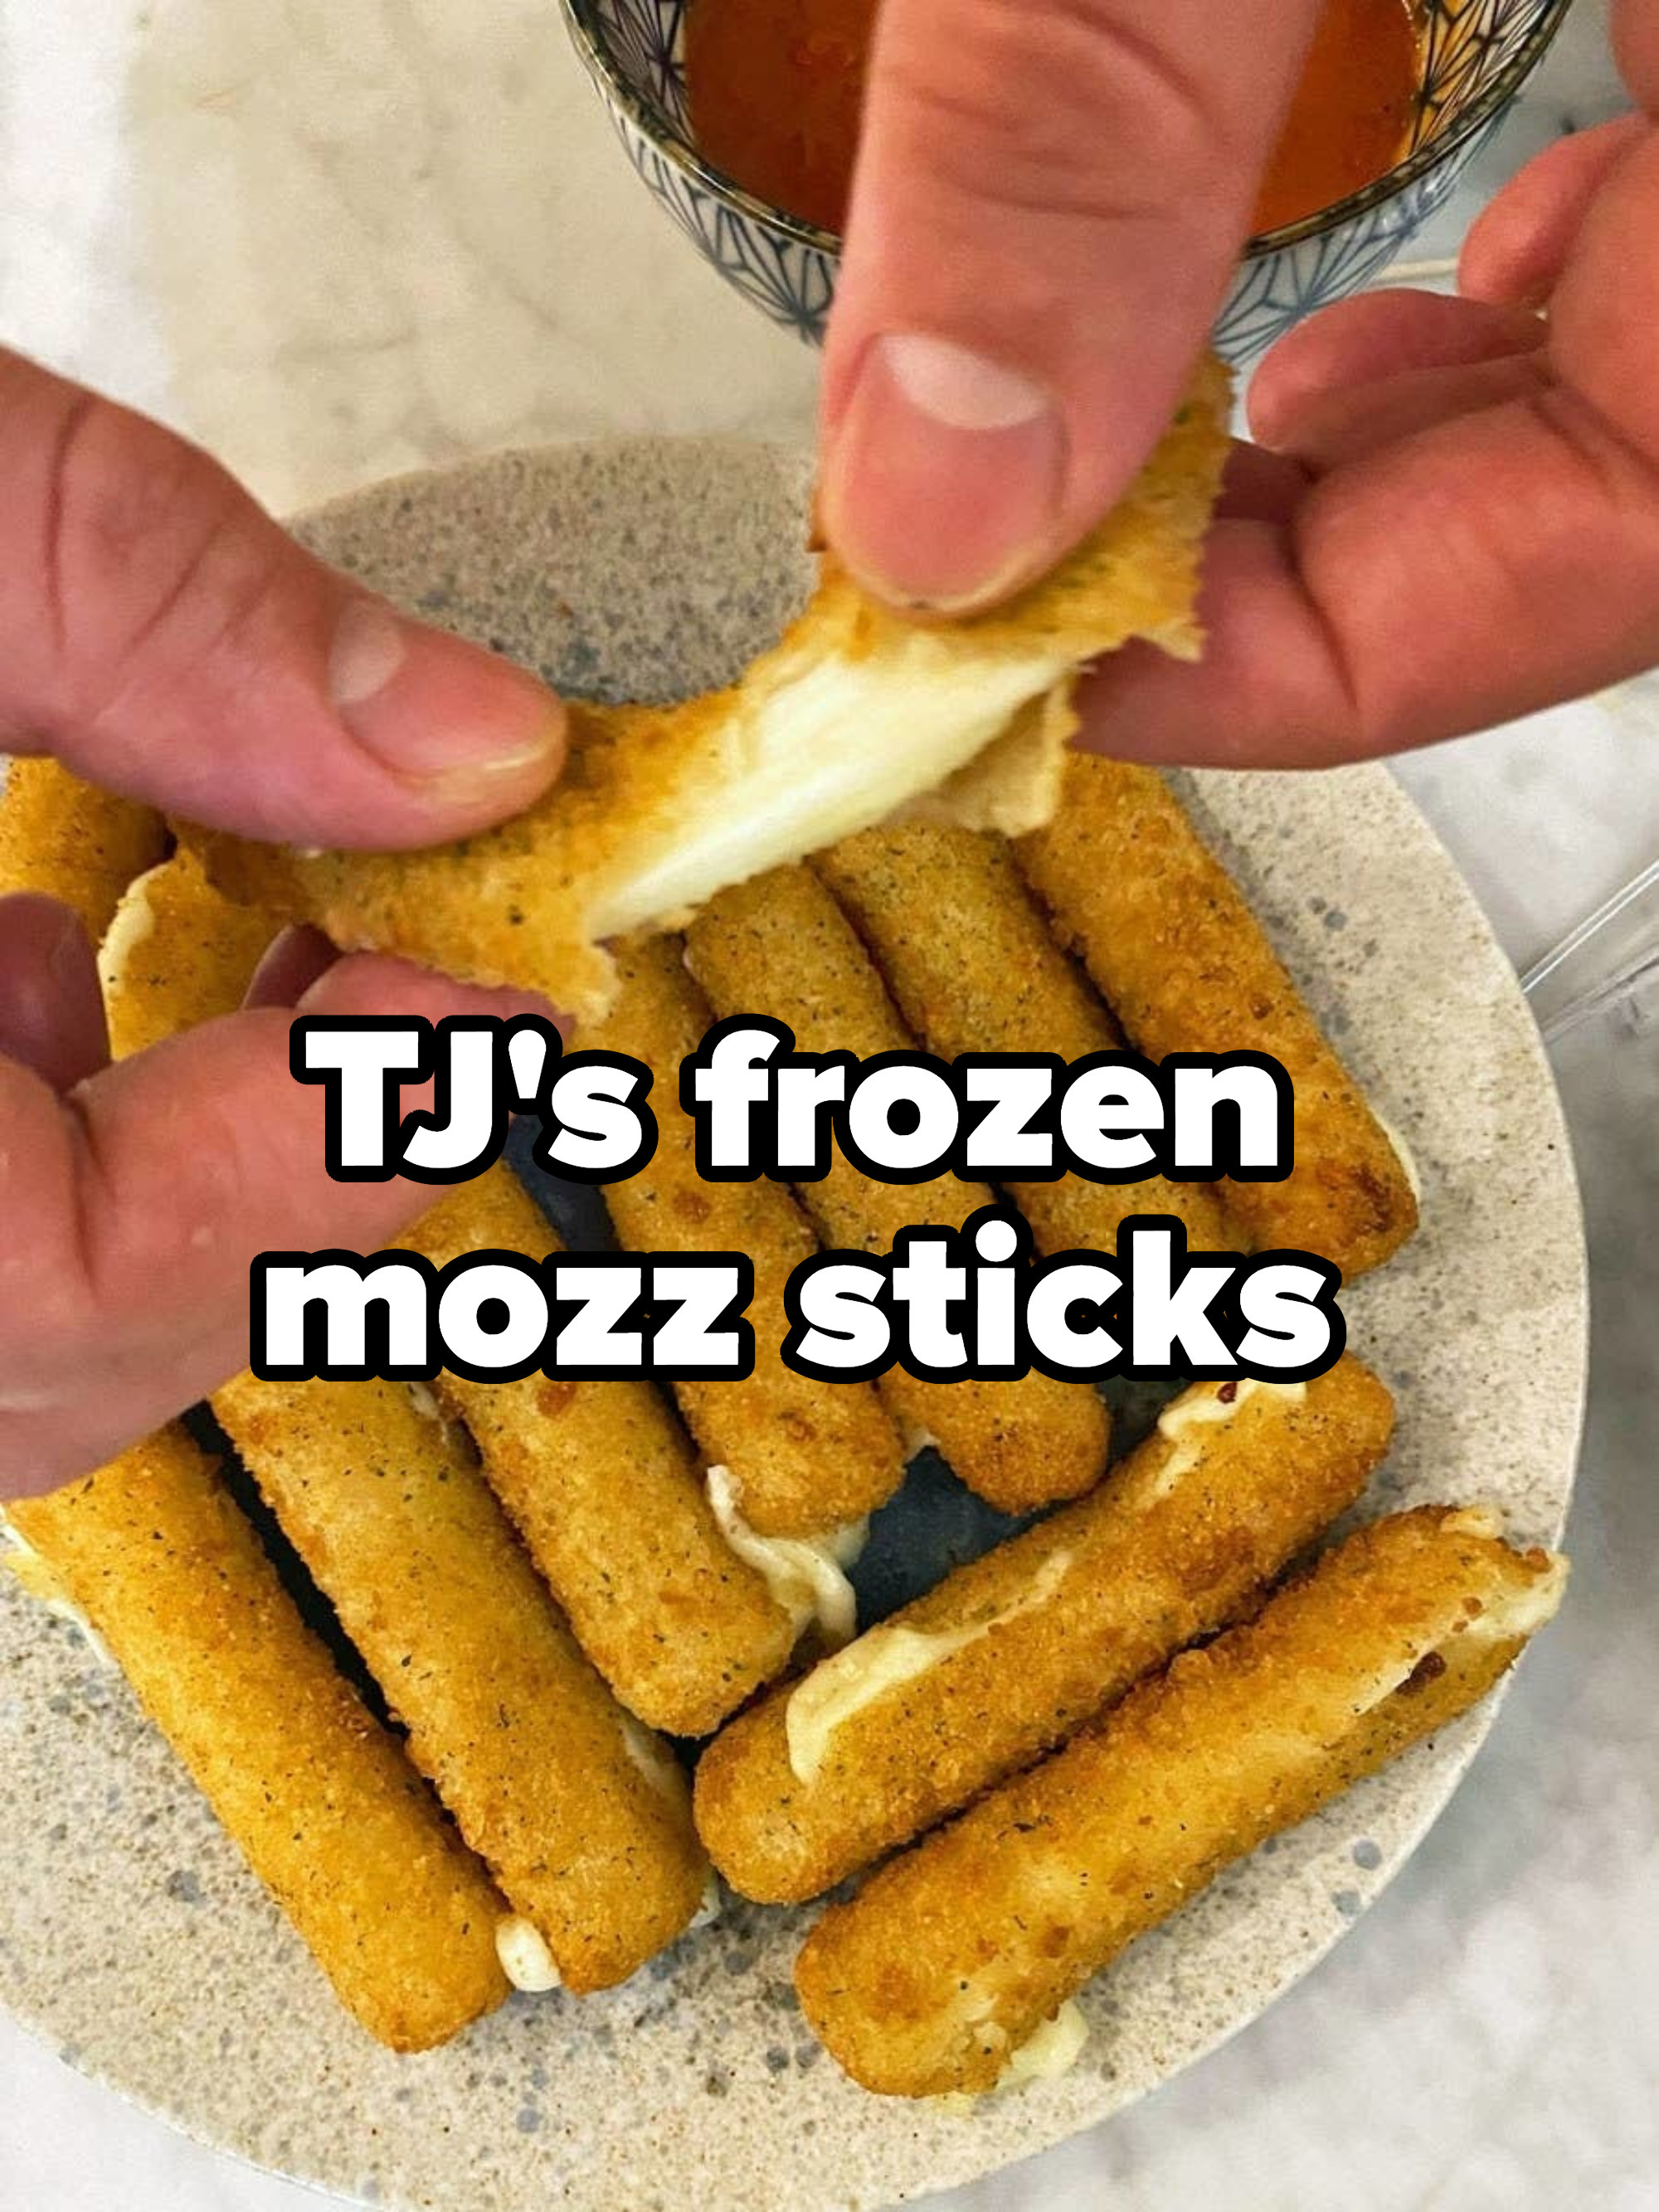 Mozzarella sticks made in the air fryer.